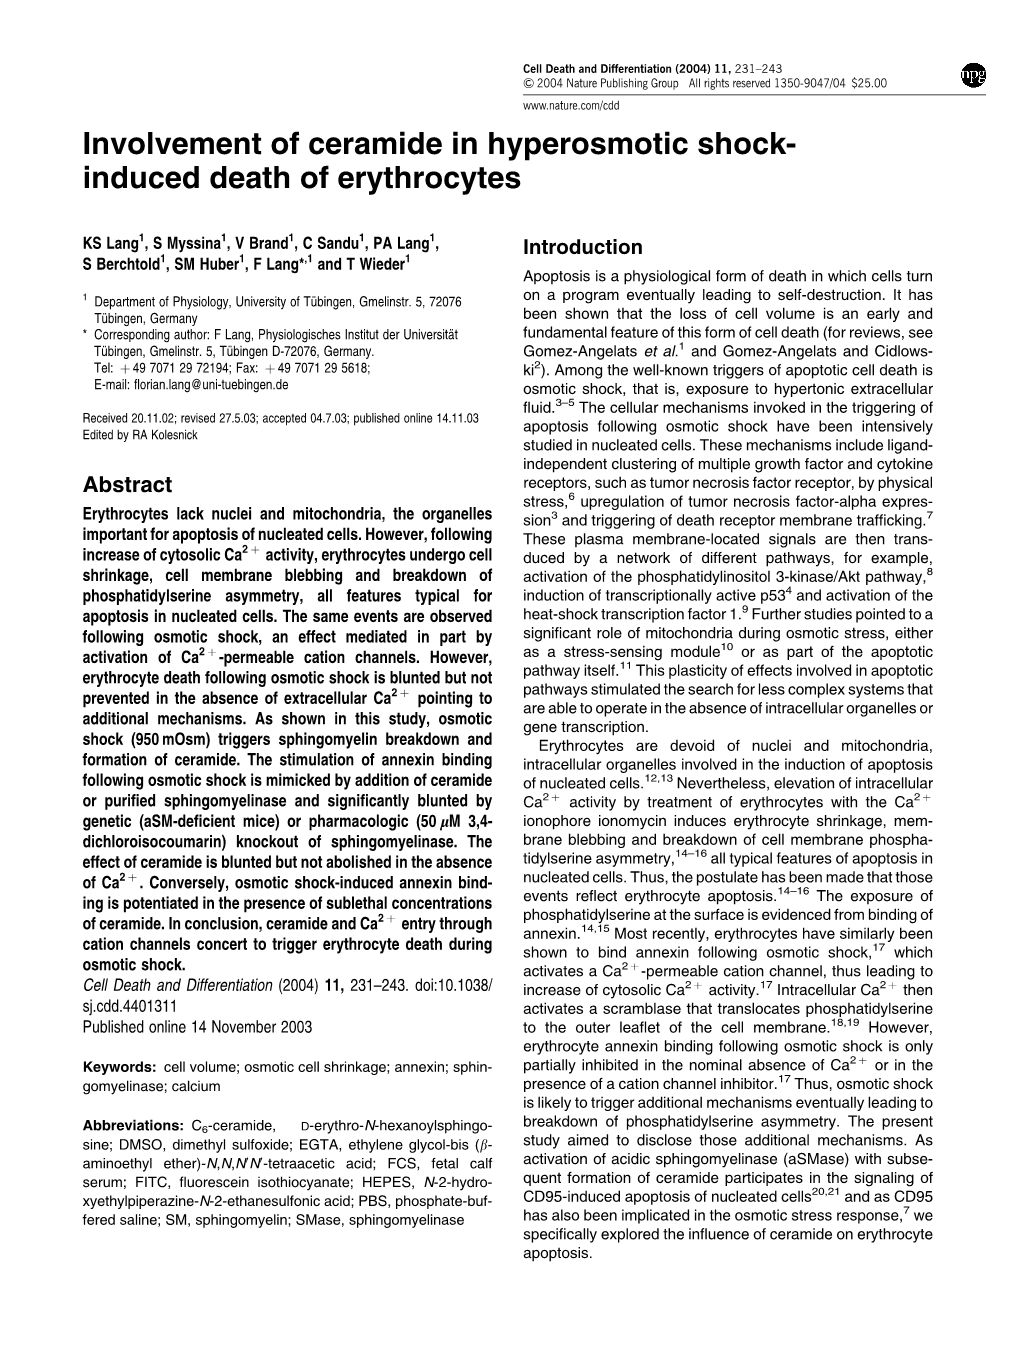 Involvement of Ceramide in Hyperosmotic Shock- Induced Death of Erythrocytes